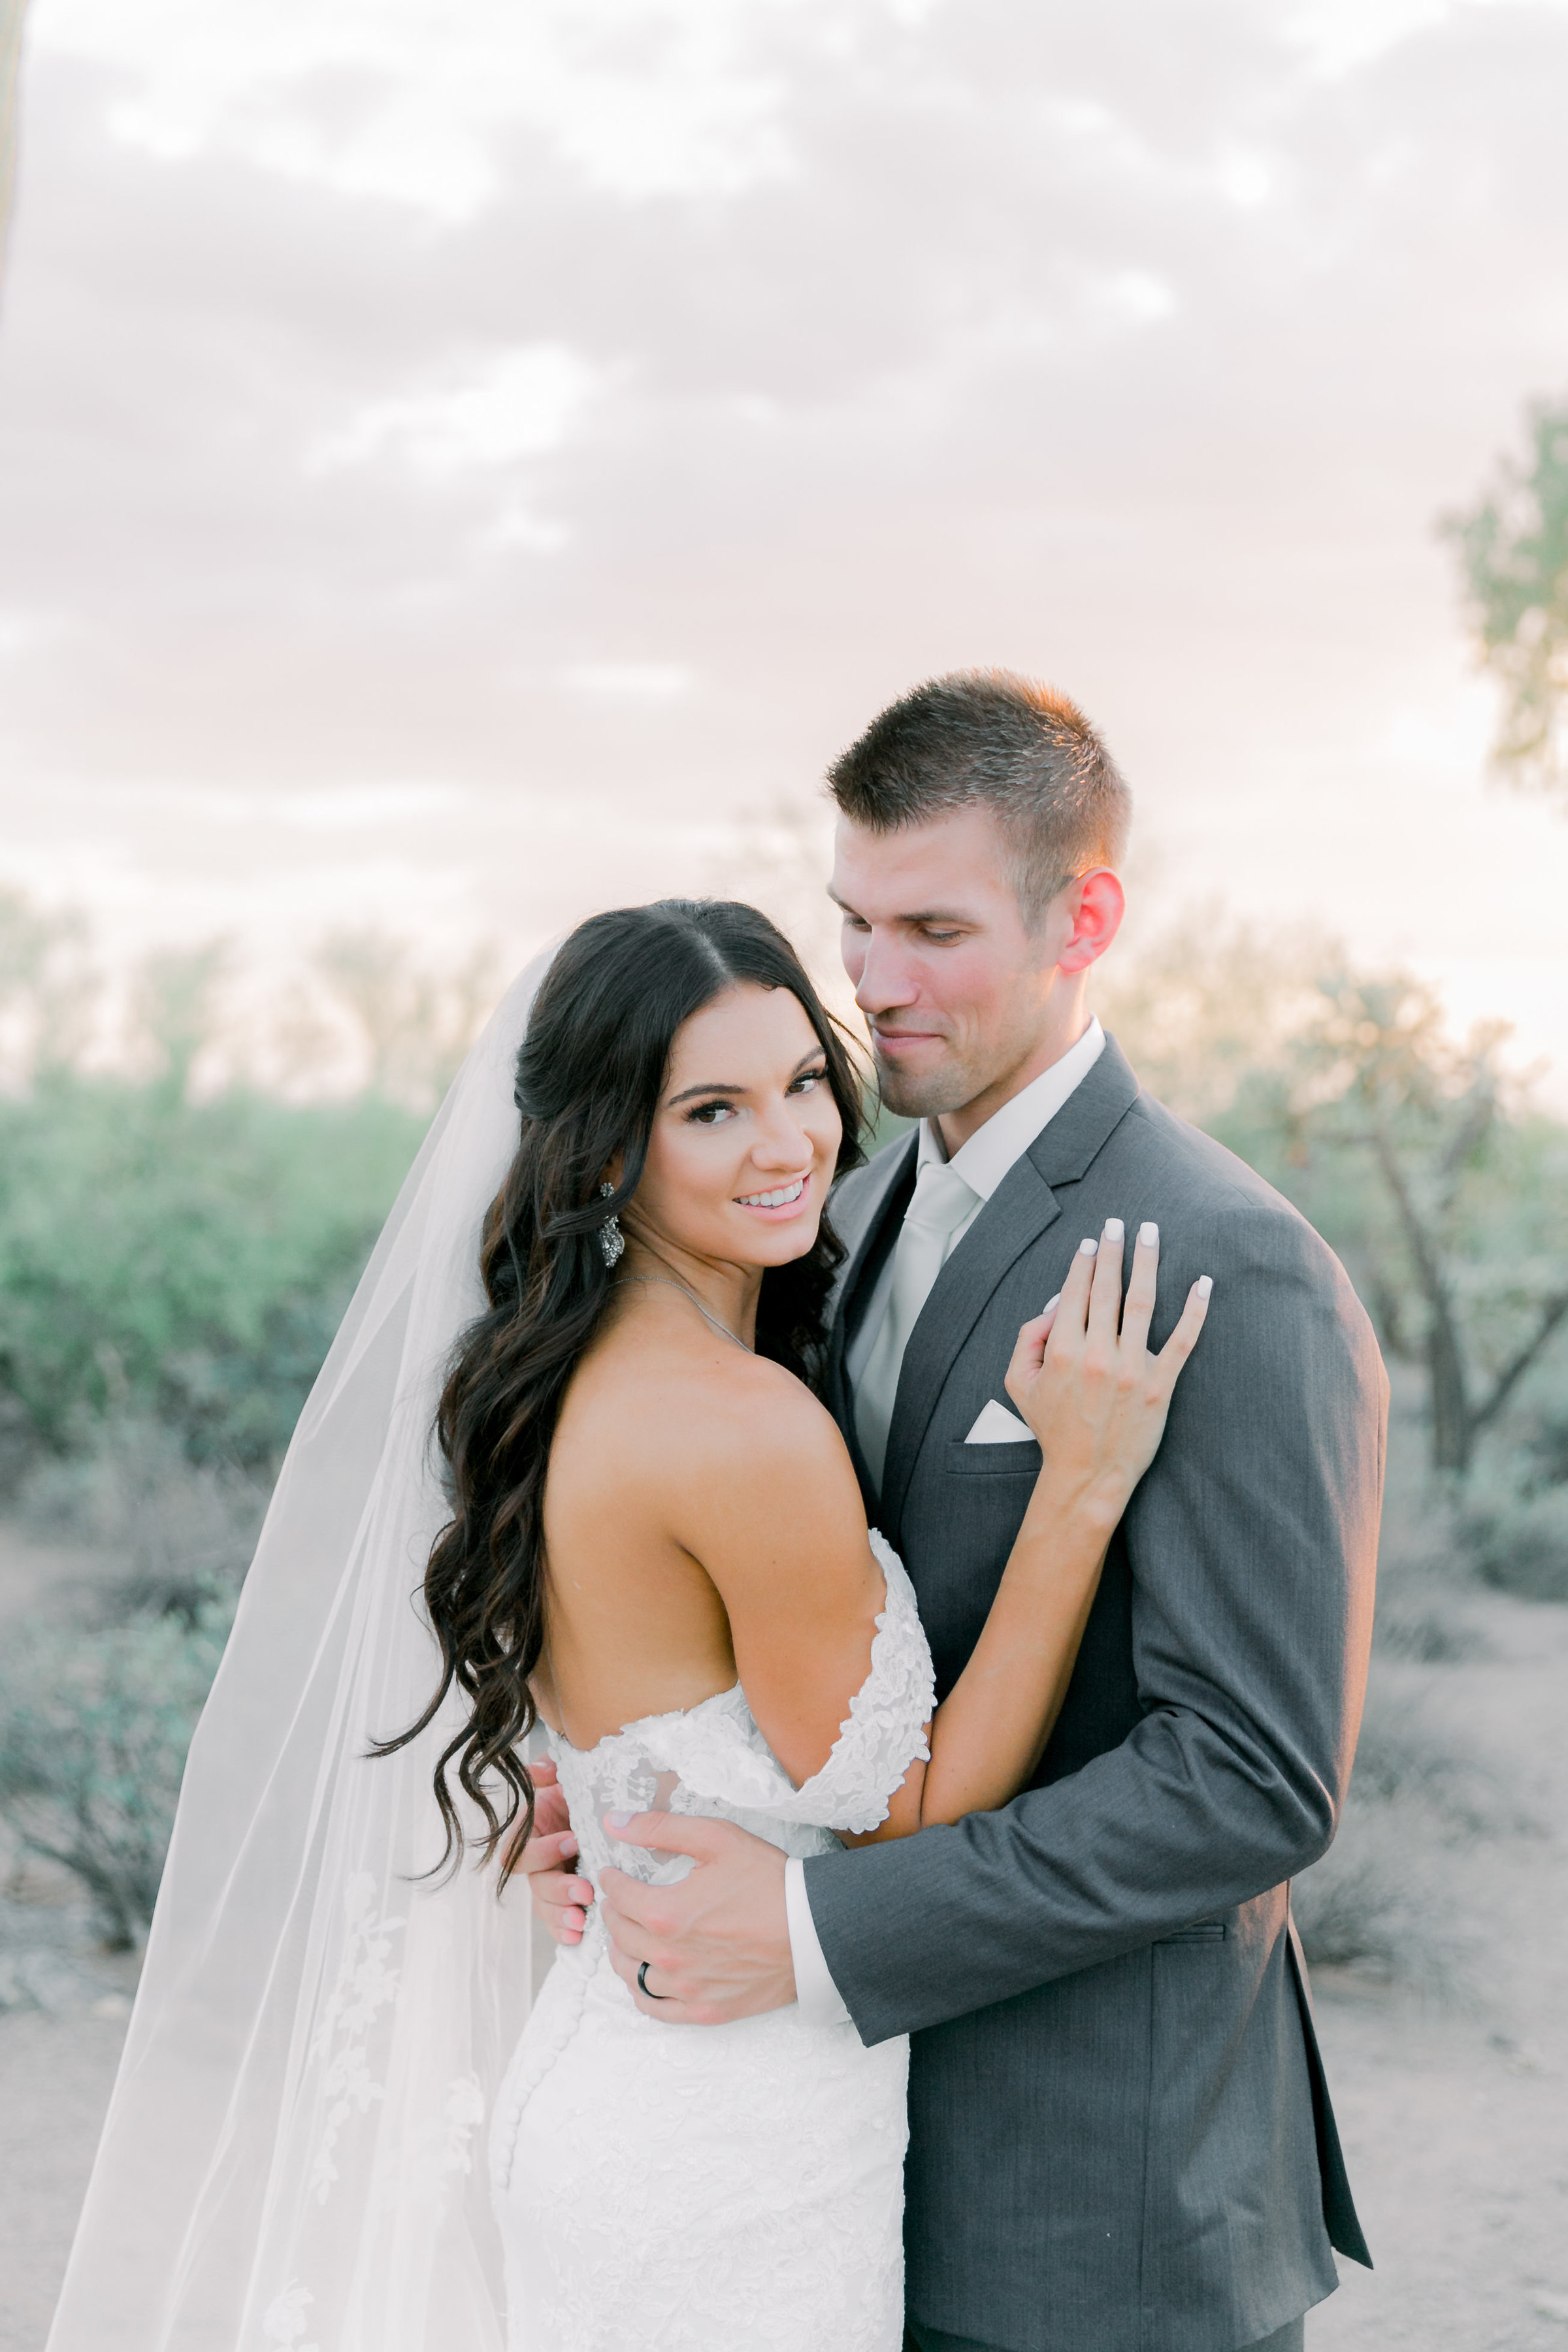 Karlie Colleen Photography - Arizona Wedding - The Paseo Venue - Jackie & Ryan -627